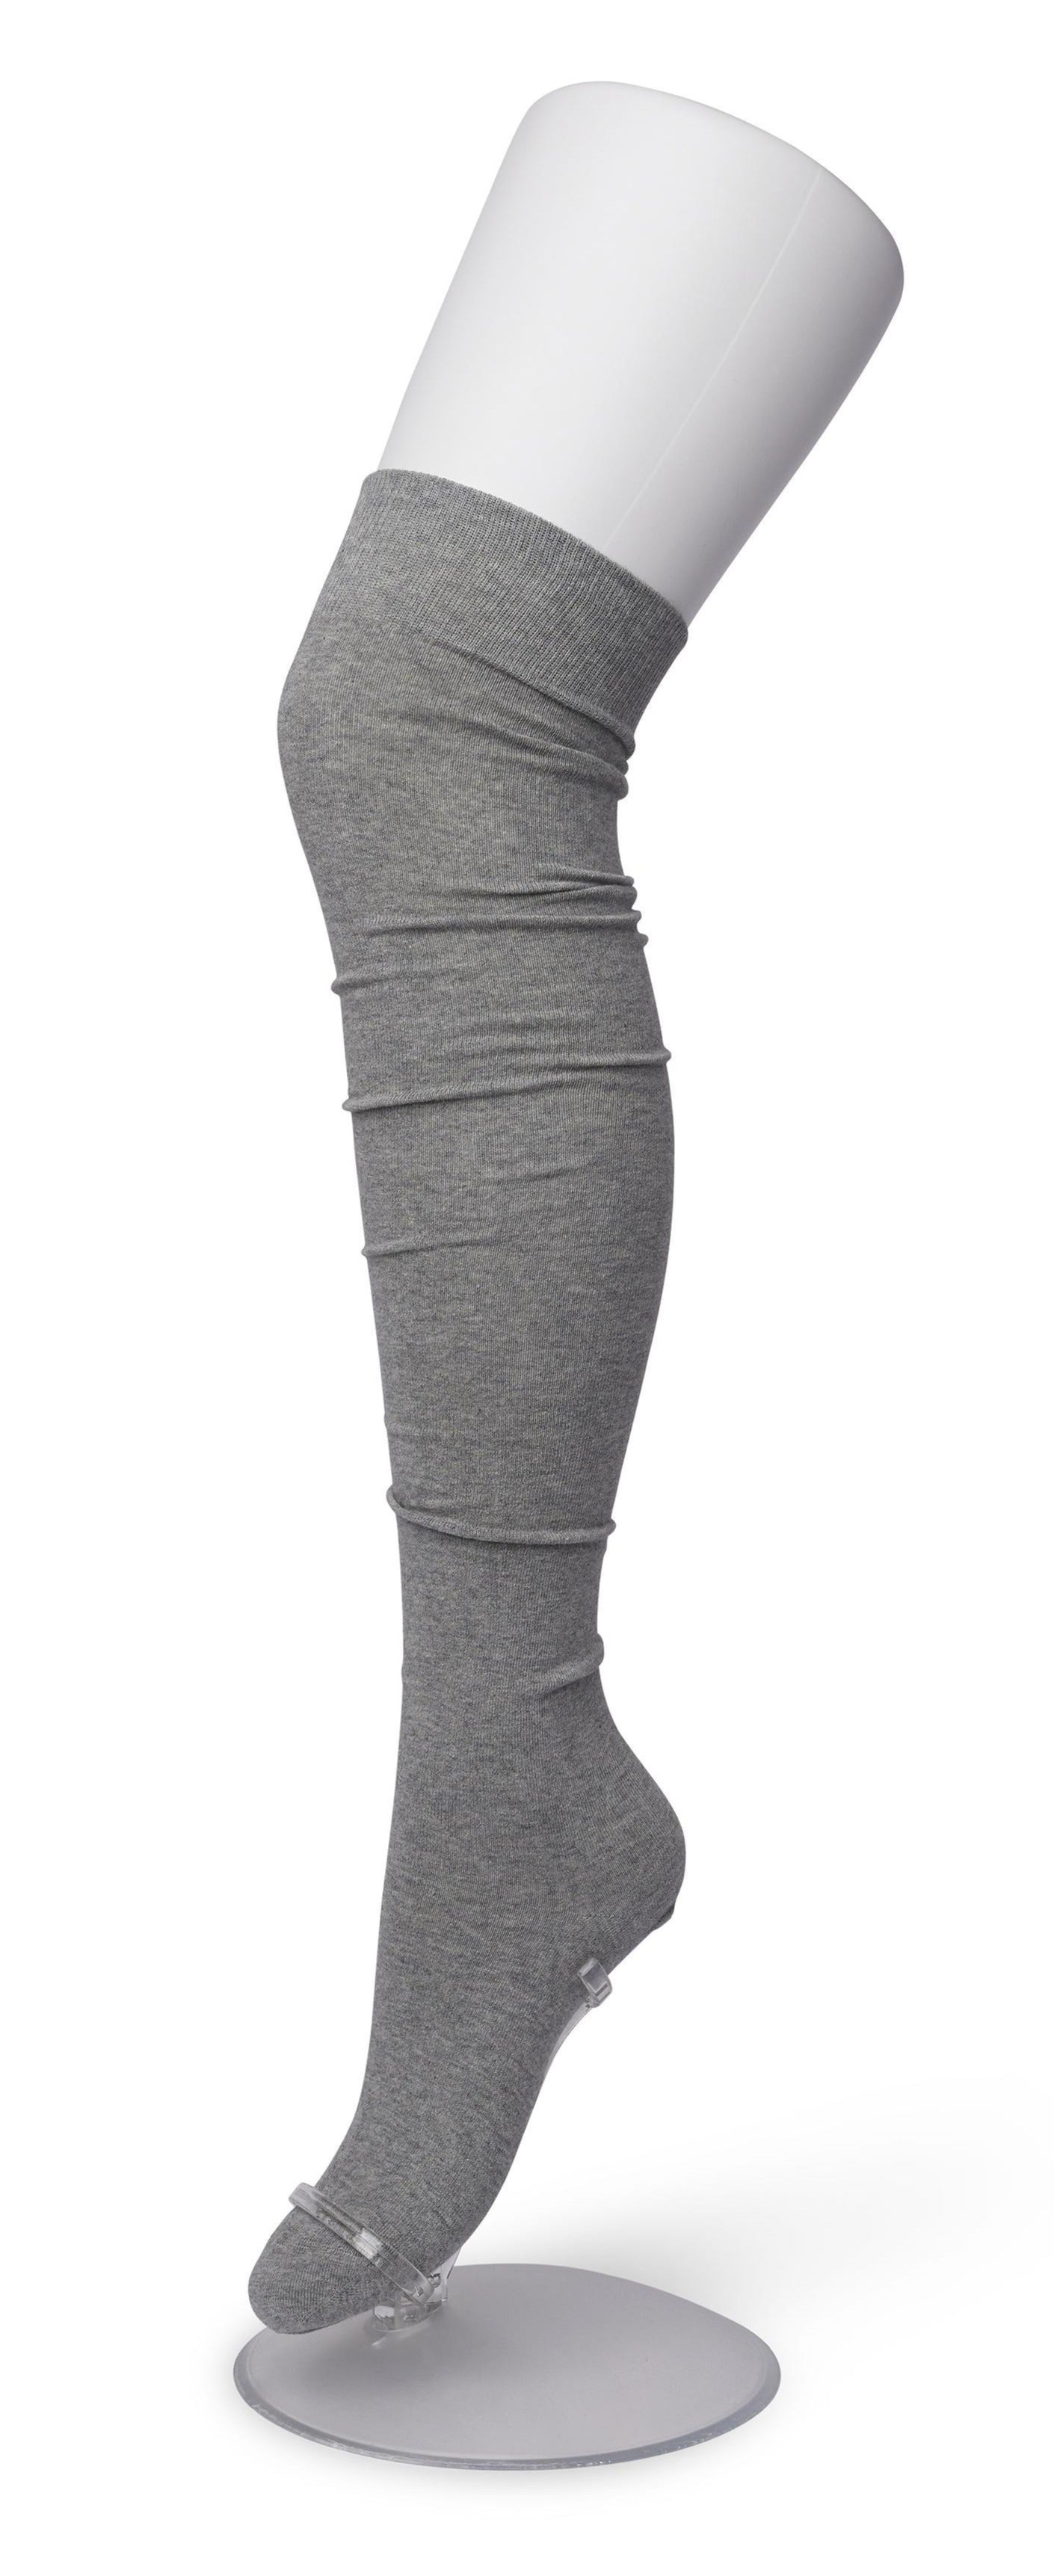 Bonnie Doon Cotton Over The Knee Sock P53496 - light grey cotton thigh high socks